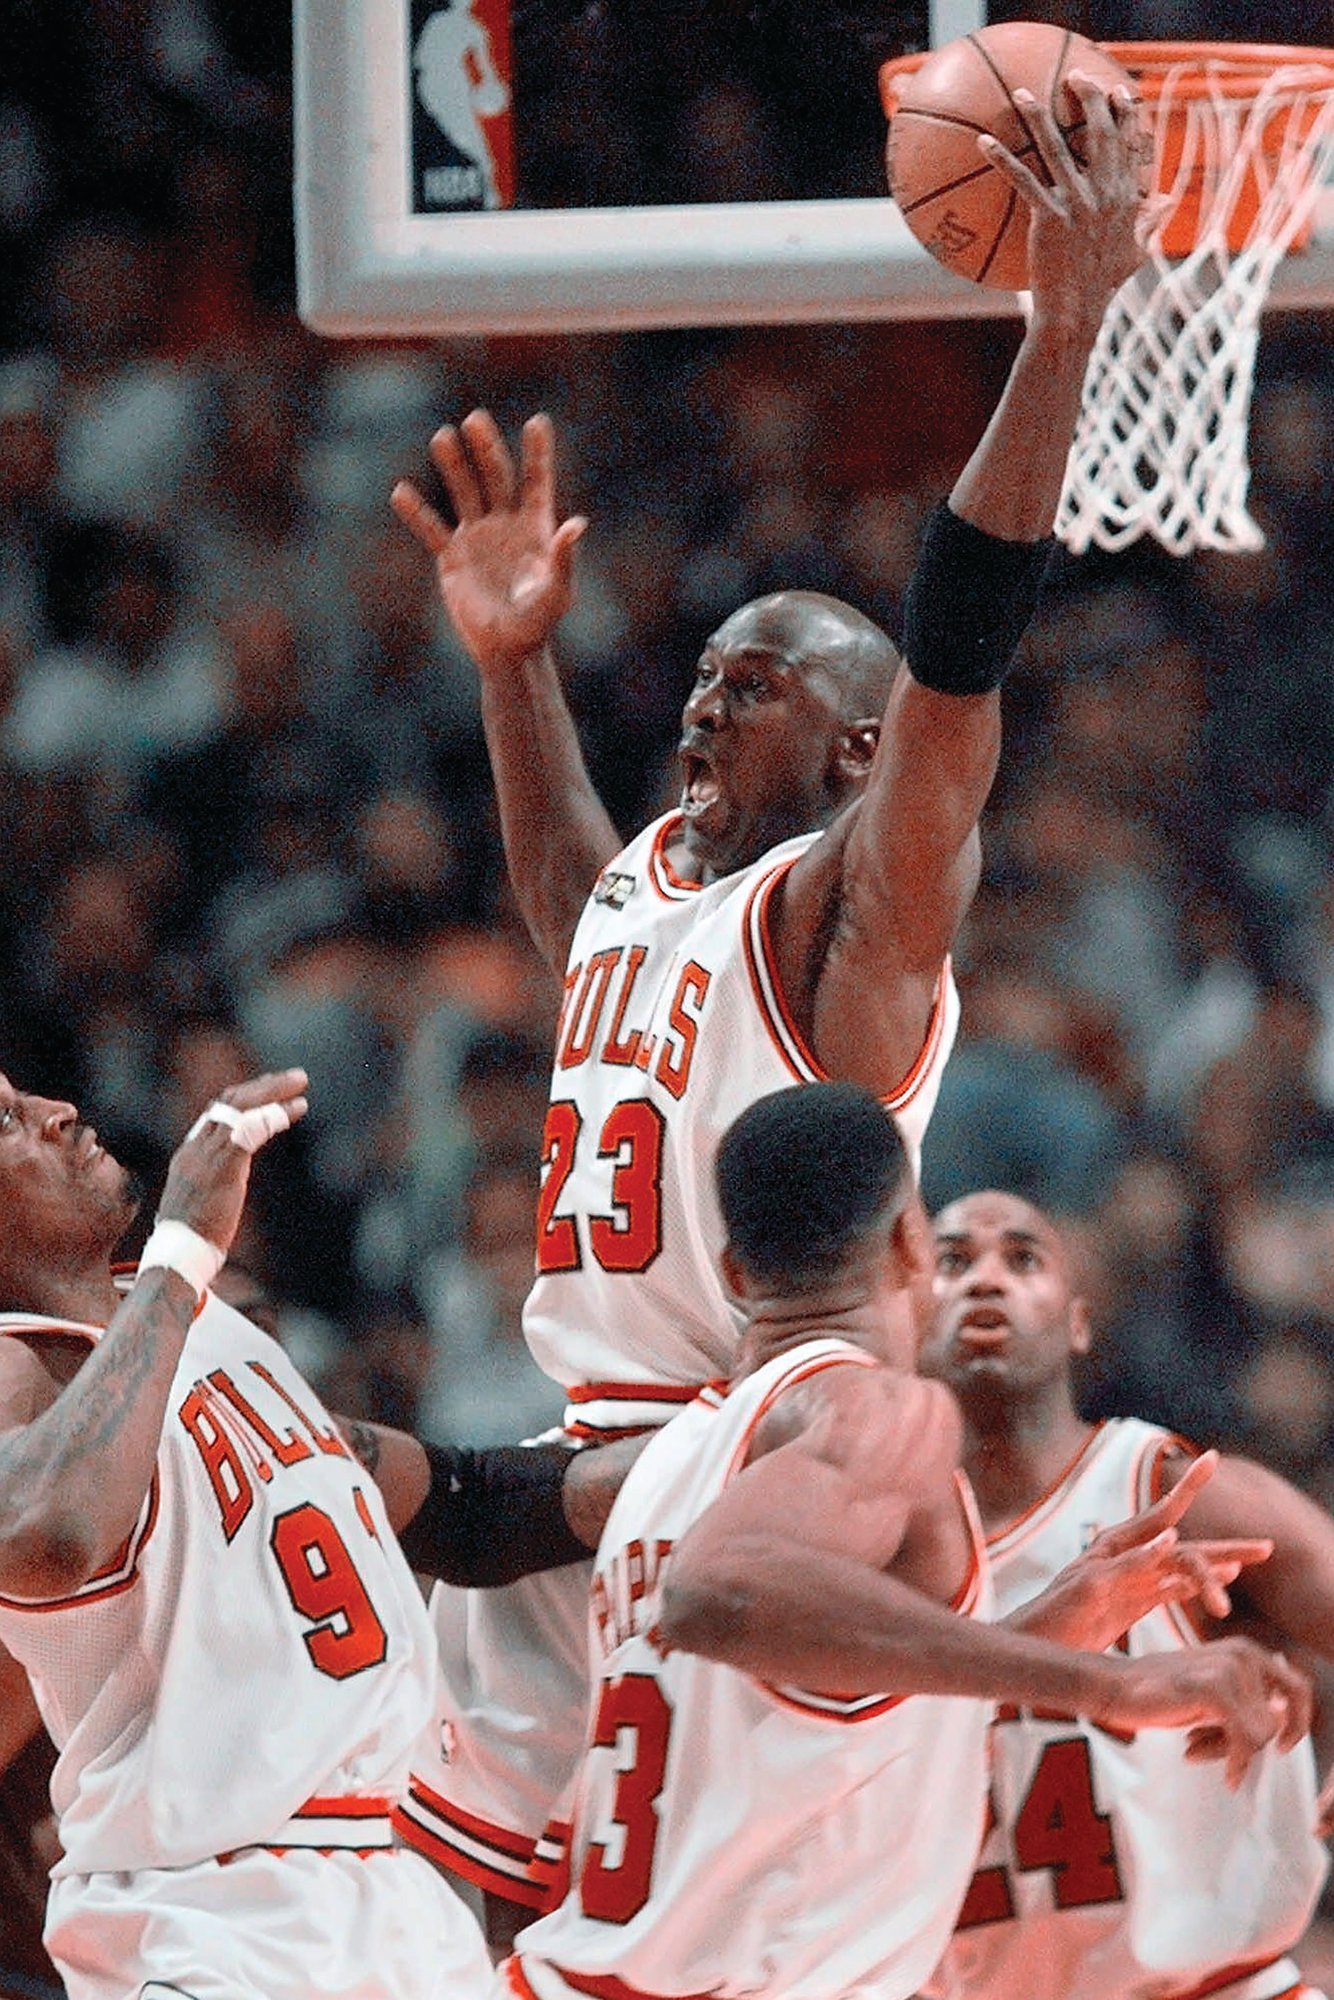 Leopardo Normalmente confiar Jordan: Winning 6th NBA title with Bulls was 'trying year' | The Sumter Item